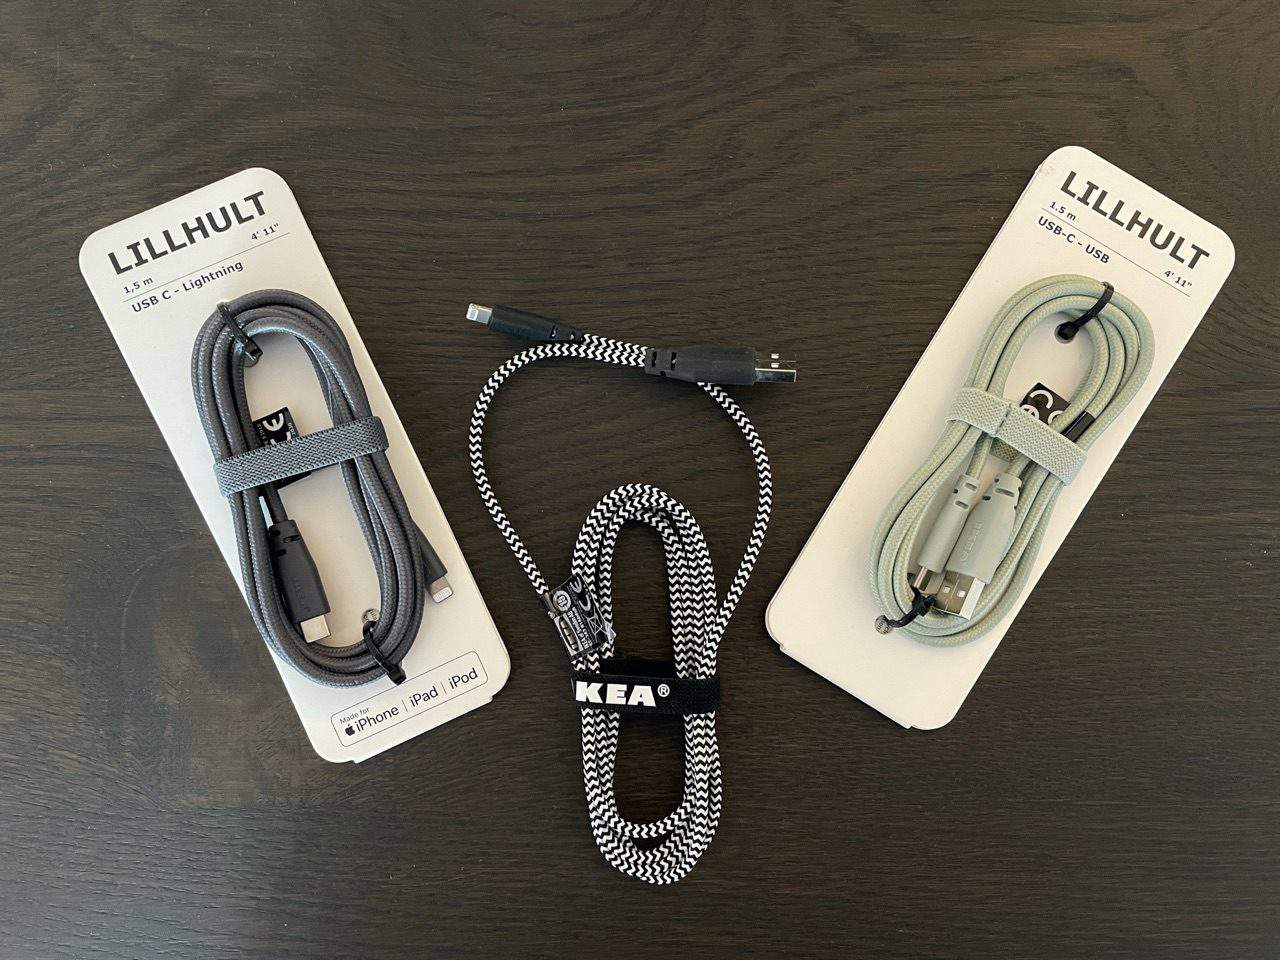 IKEA LILLHULT kabels met MFi.